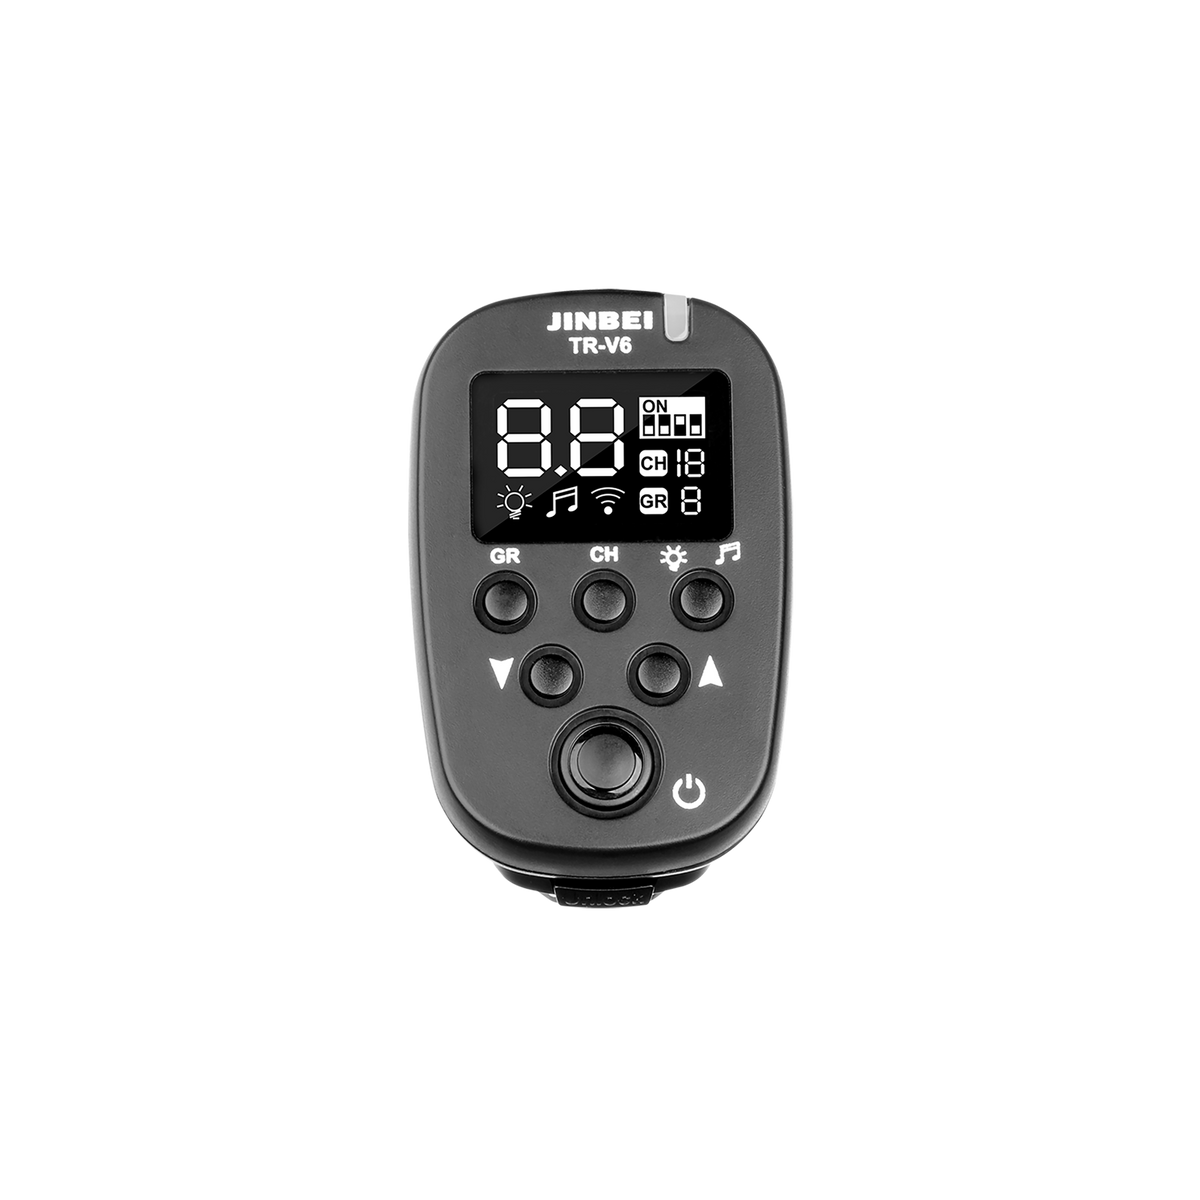 TR-V6 Radio remote control set V2